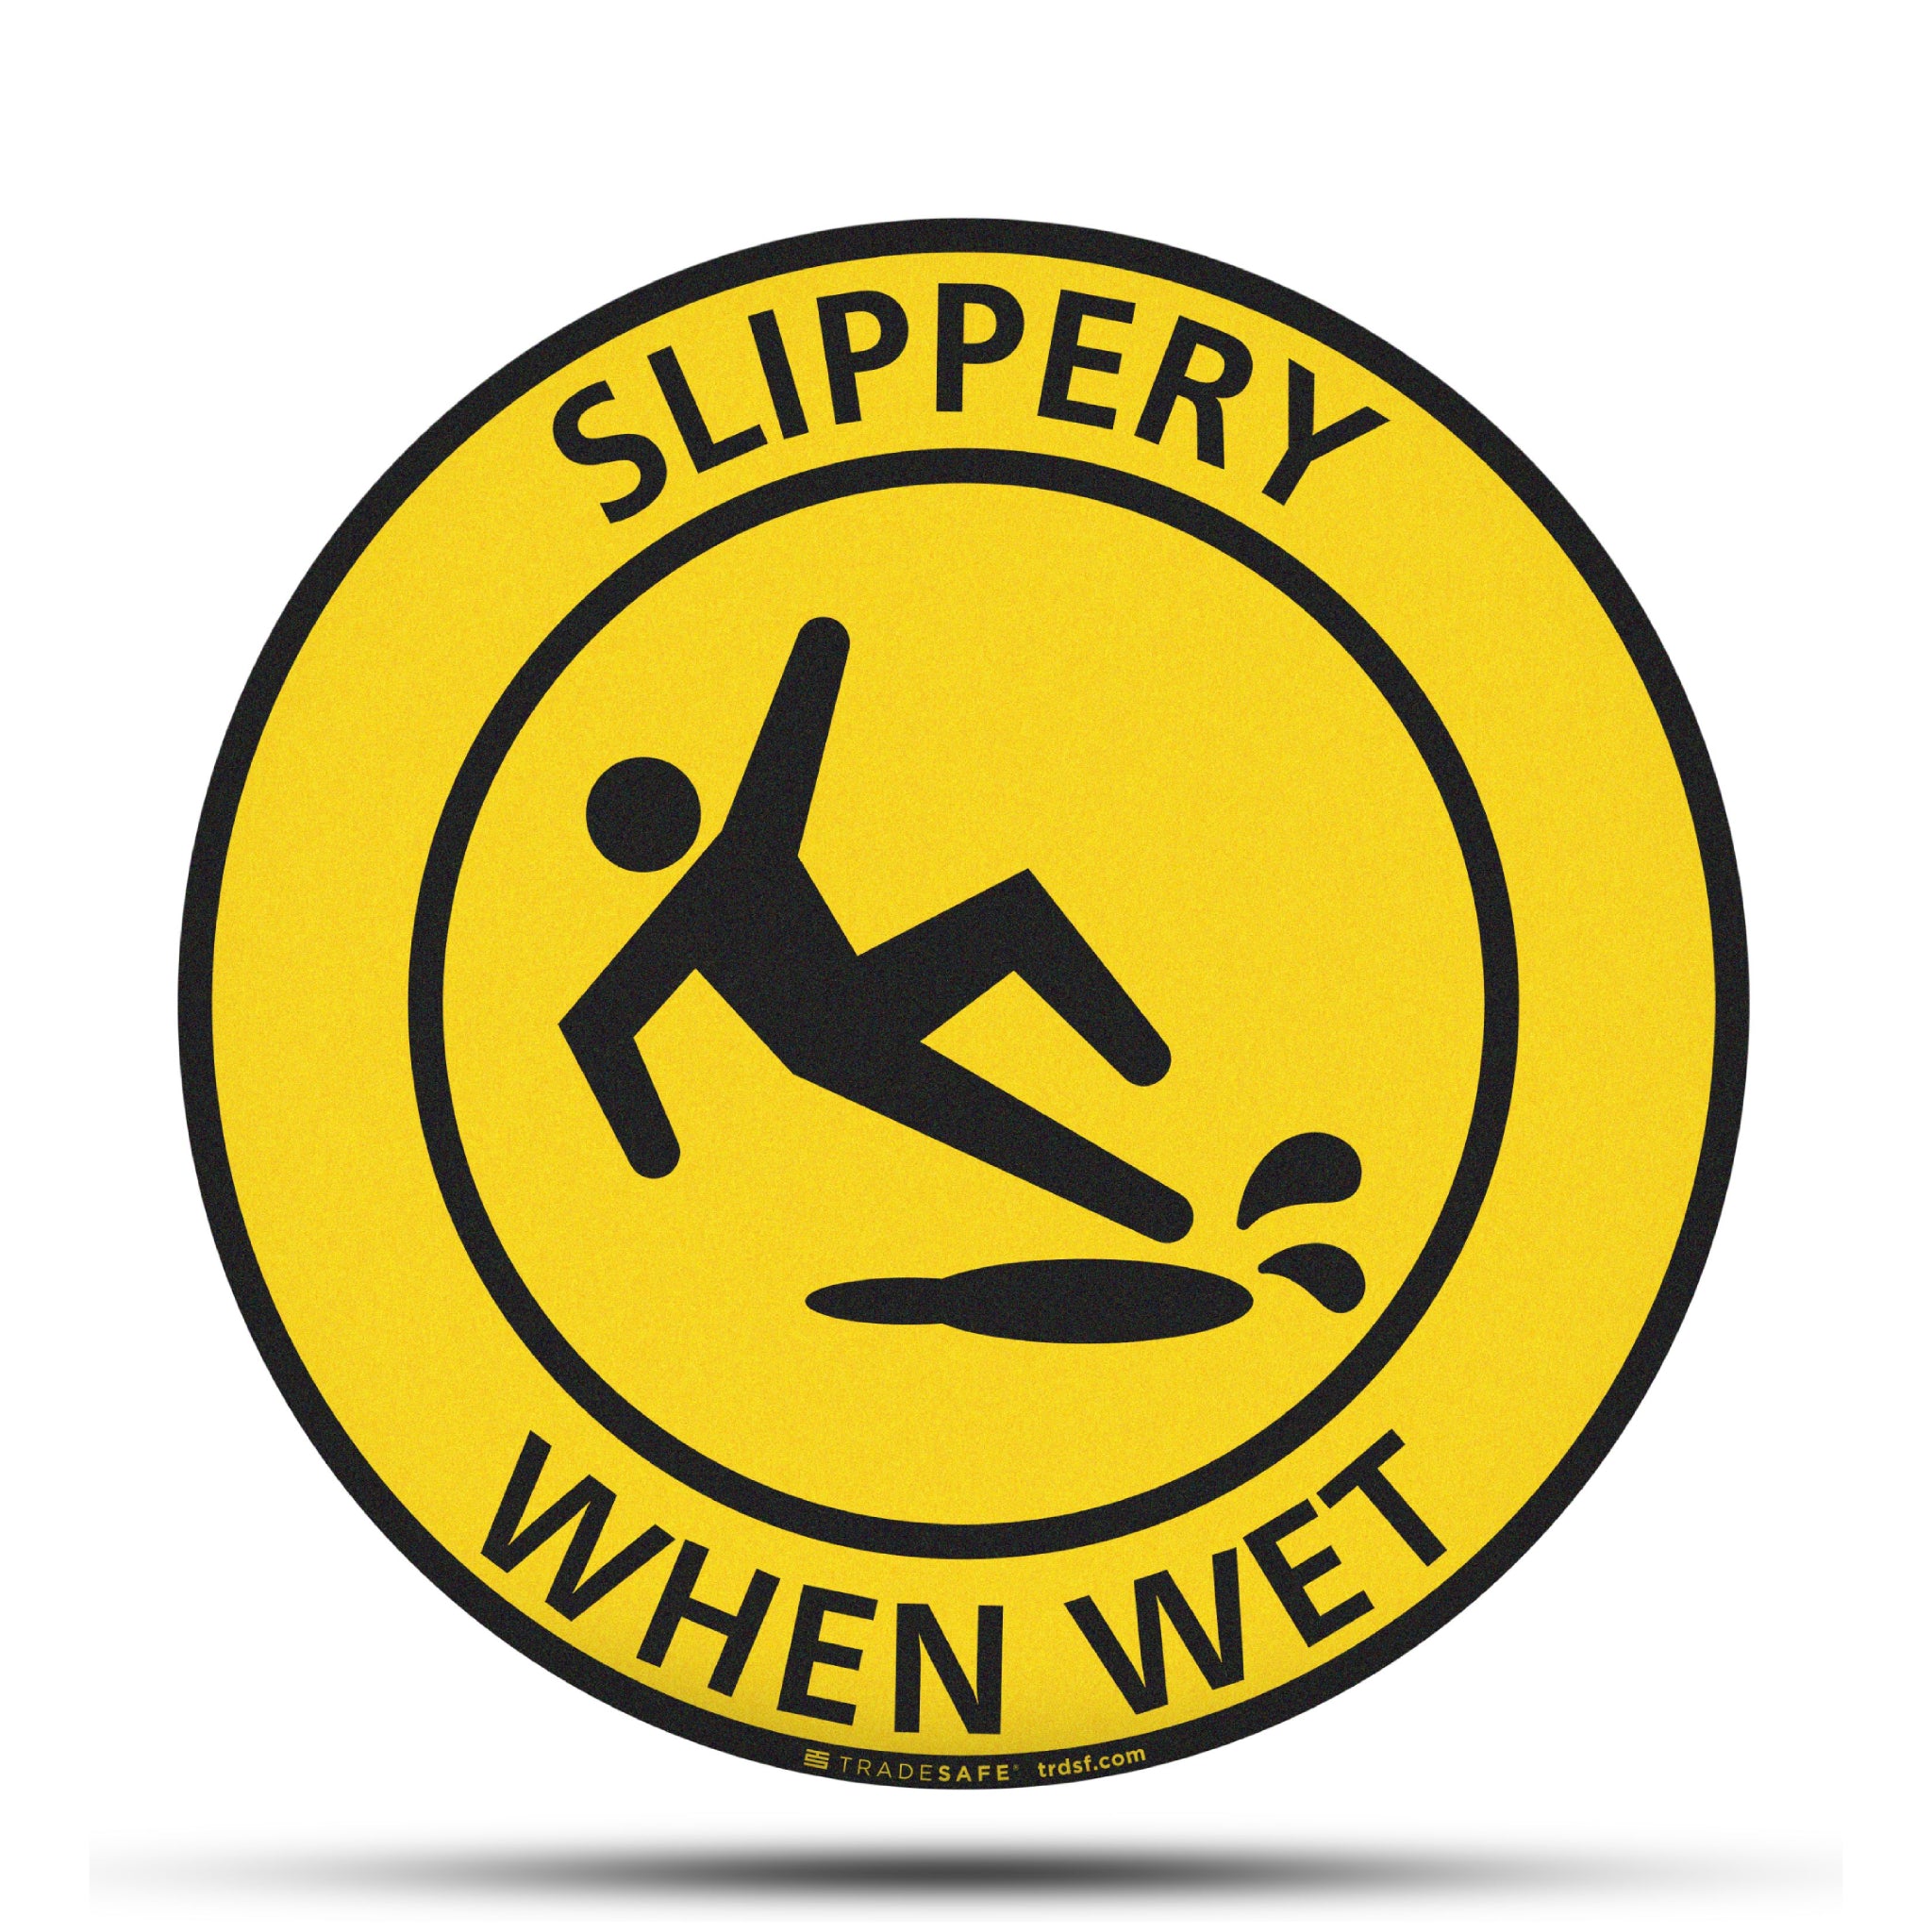 Slippery When Signs - Anti-Slip Floor | TRADESAFE